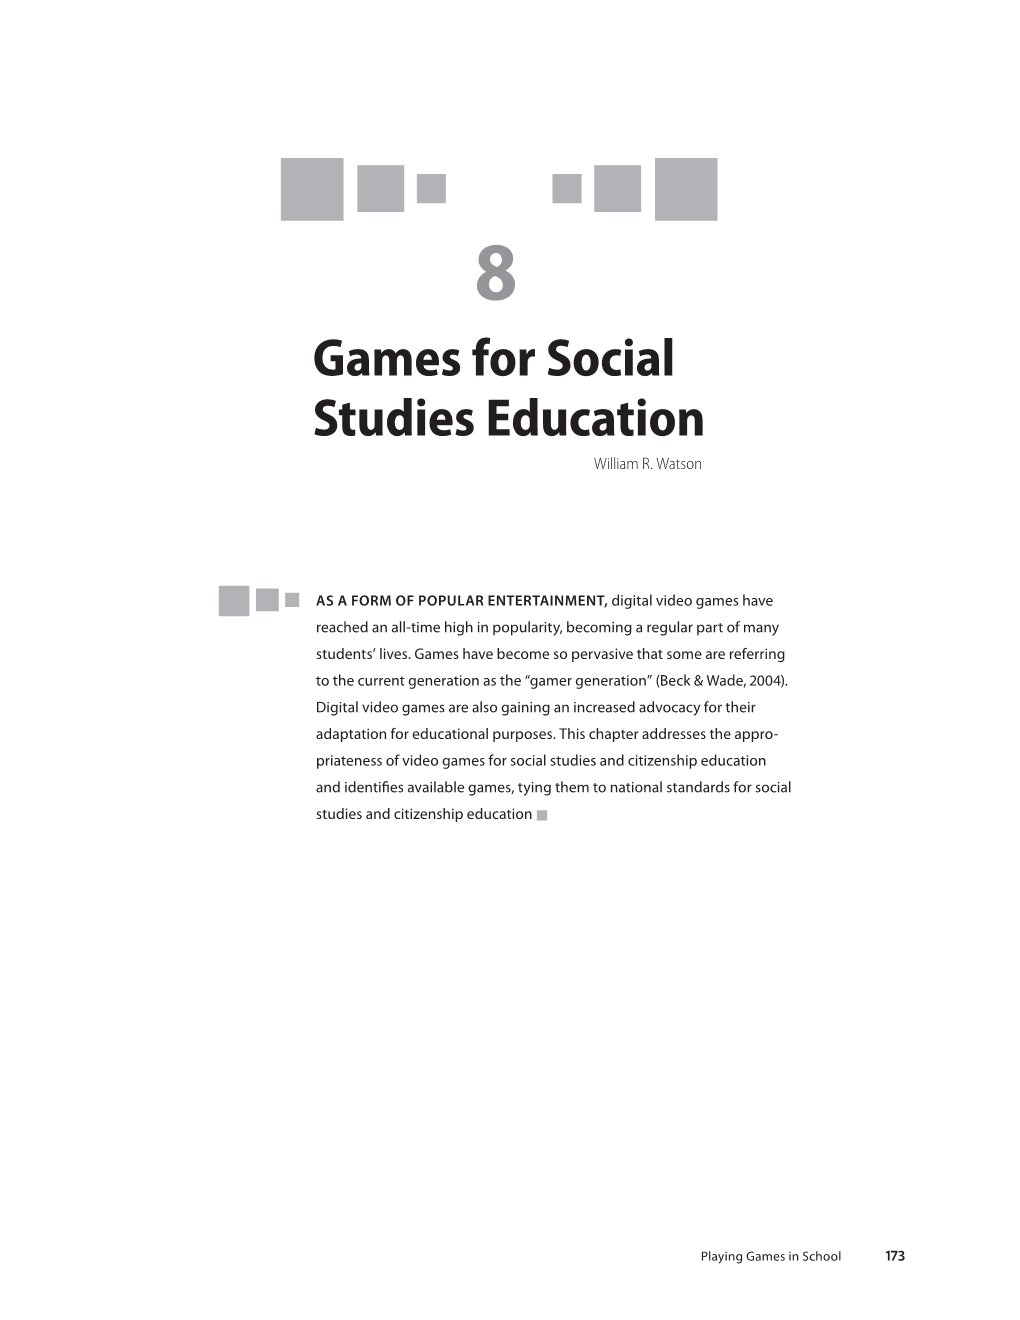 Games for Social Studies Education William R